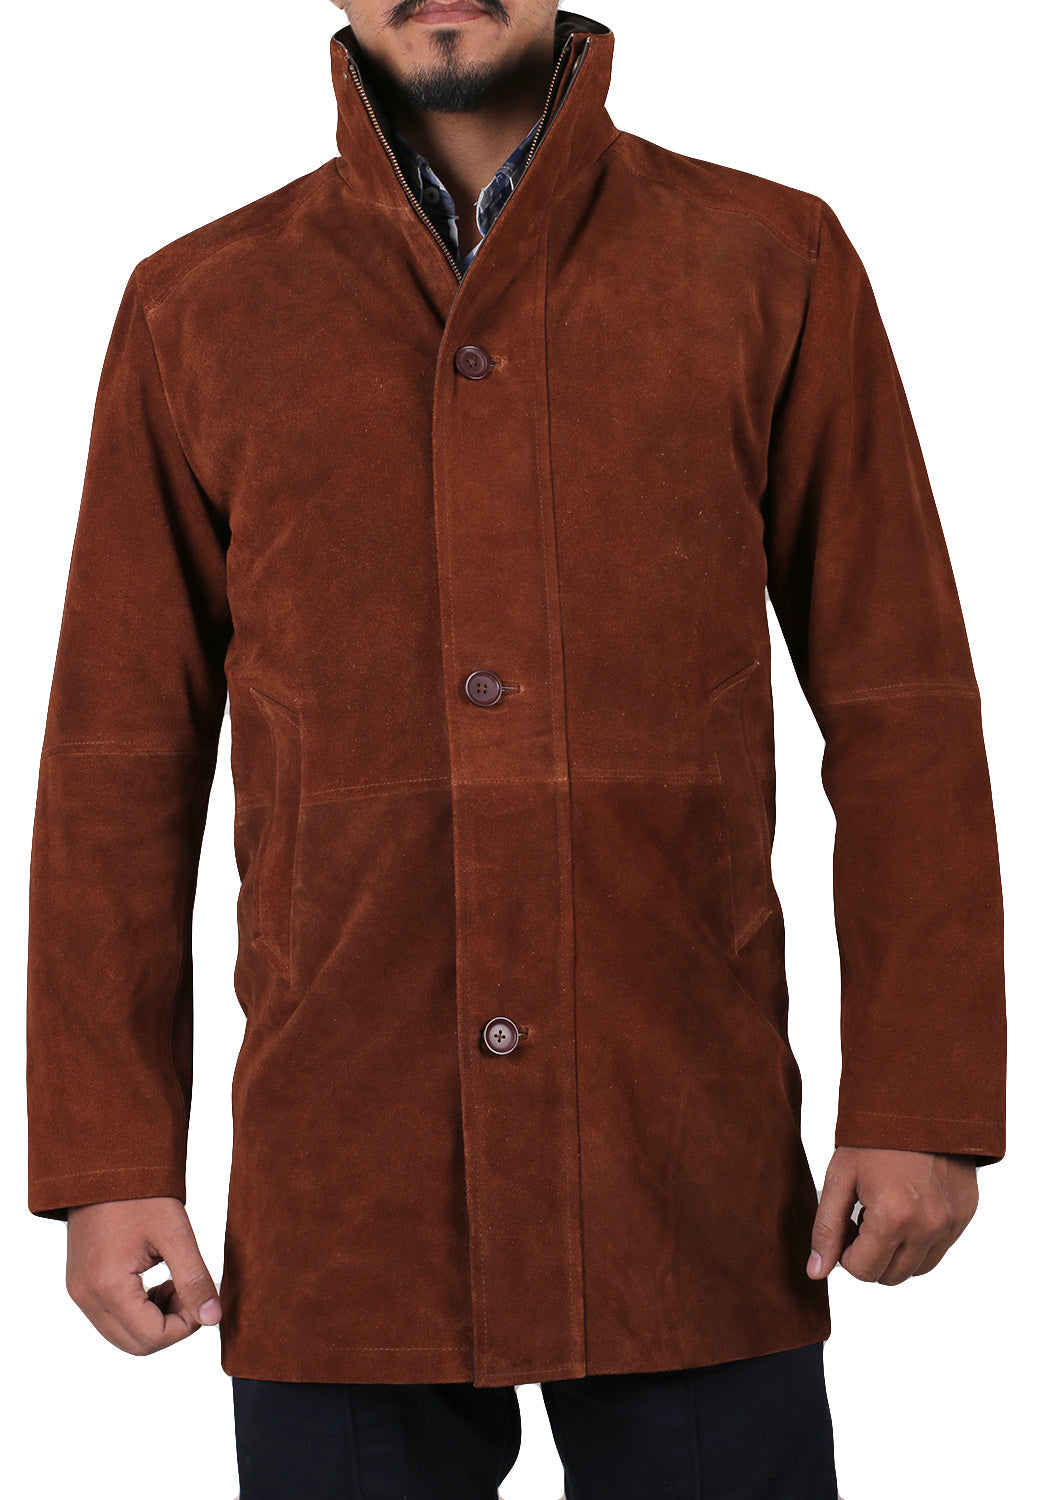 Leather Jackets Hub Men's SHERIFF WALT (ROBERT TAYLOR) COW SUEDE LEATHER COAT (Suede-Tan, Long Coat) - 1502774